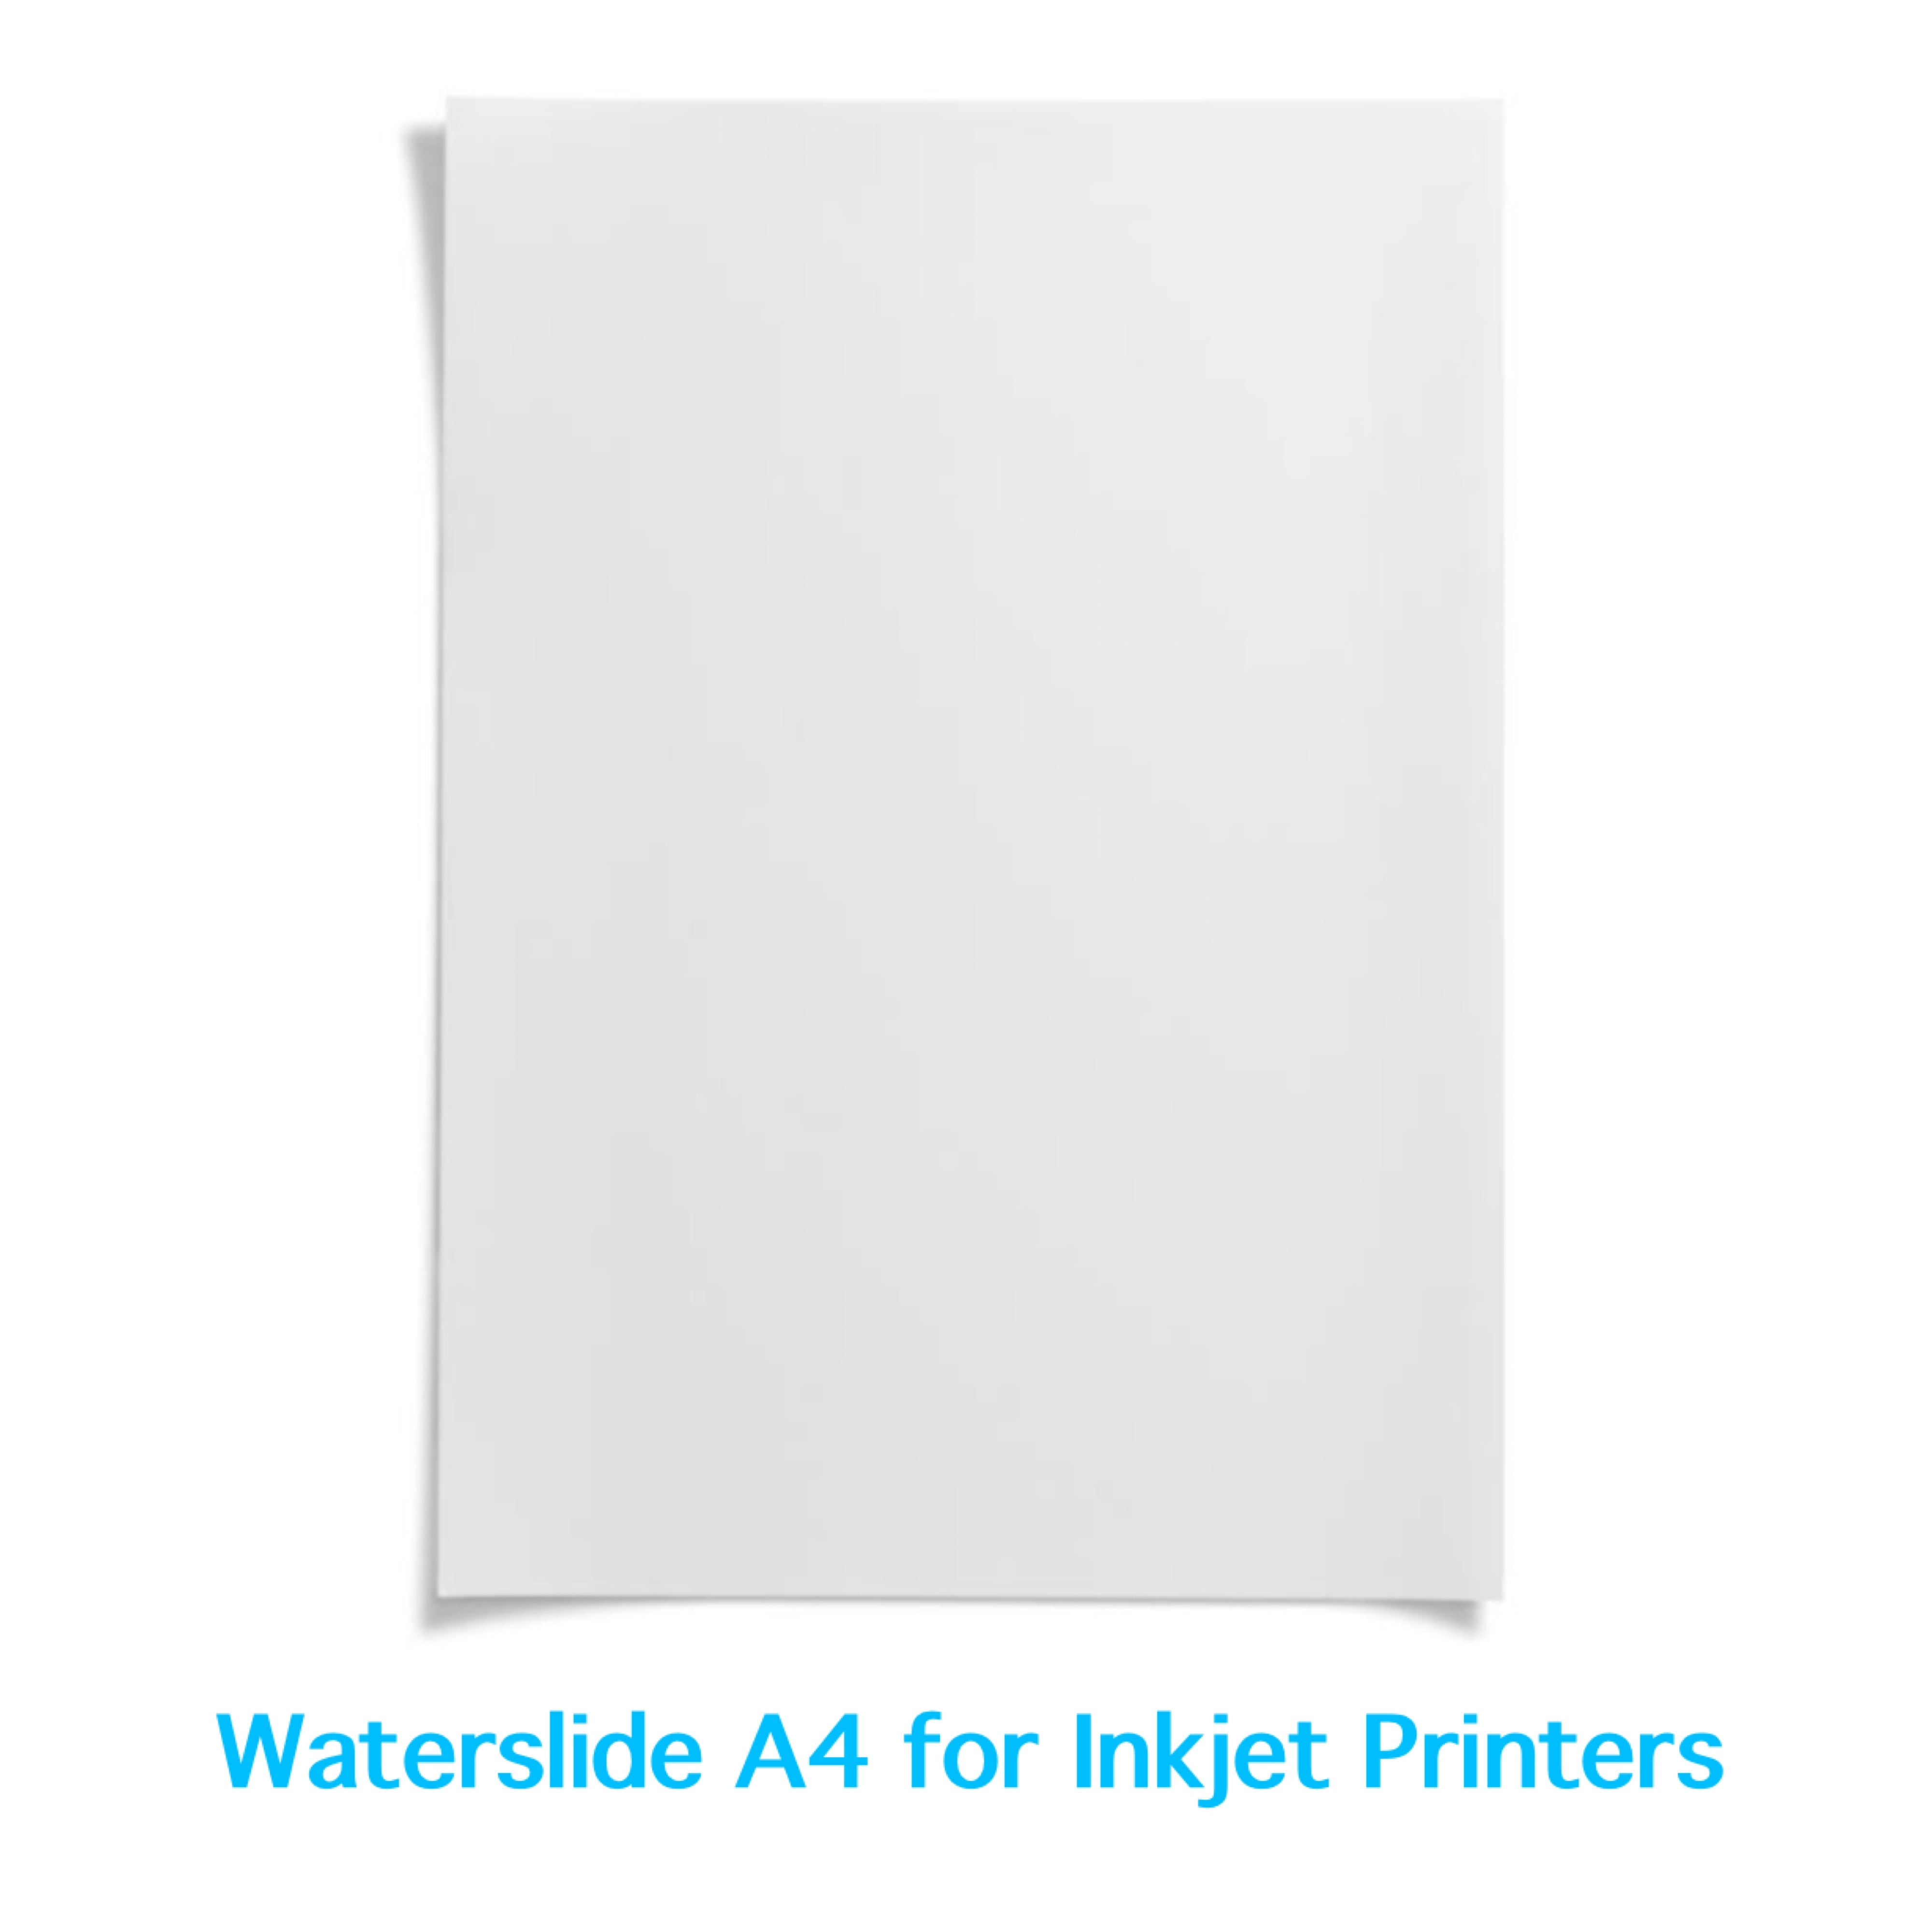 Waterslide Paper A4 for Inkjet Printers